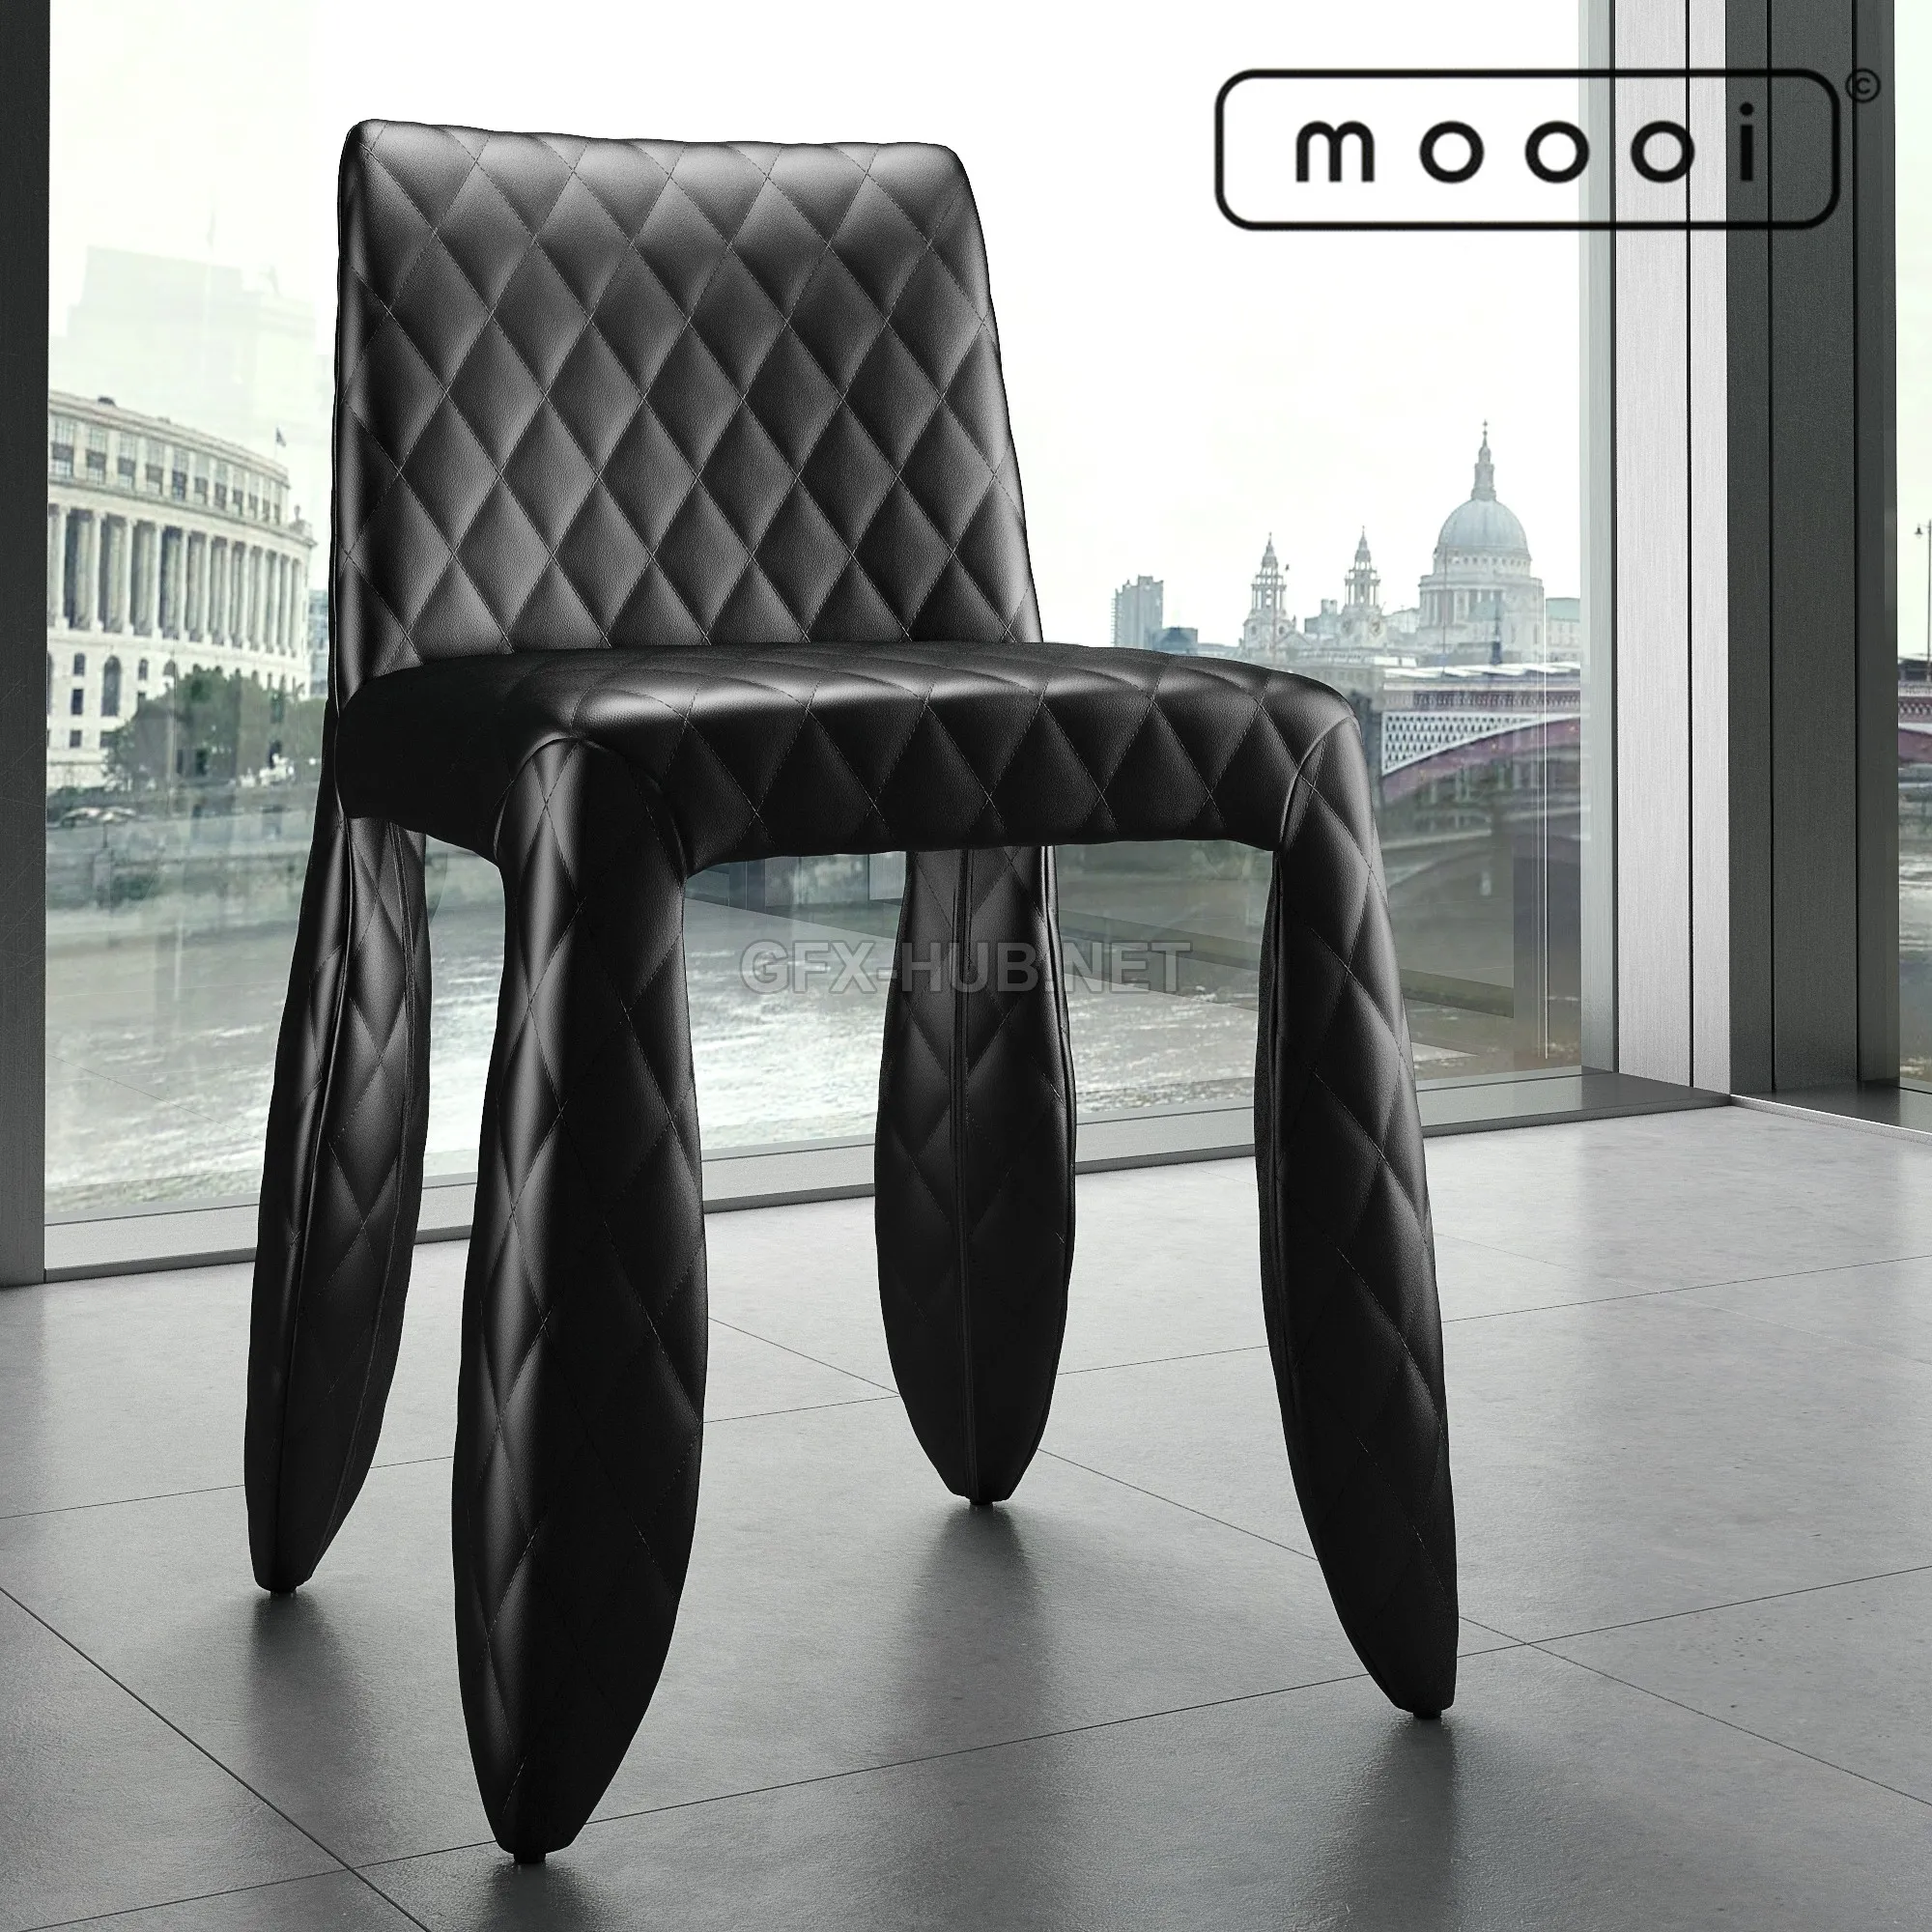 FURNITURE 3D MODELS – Chair Moooi Monster Chair 2